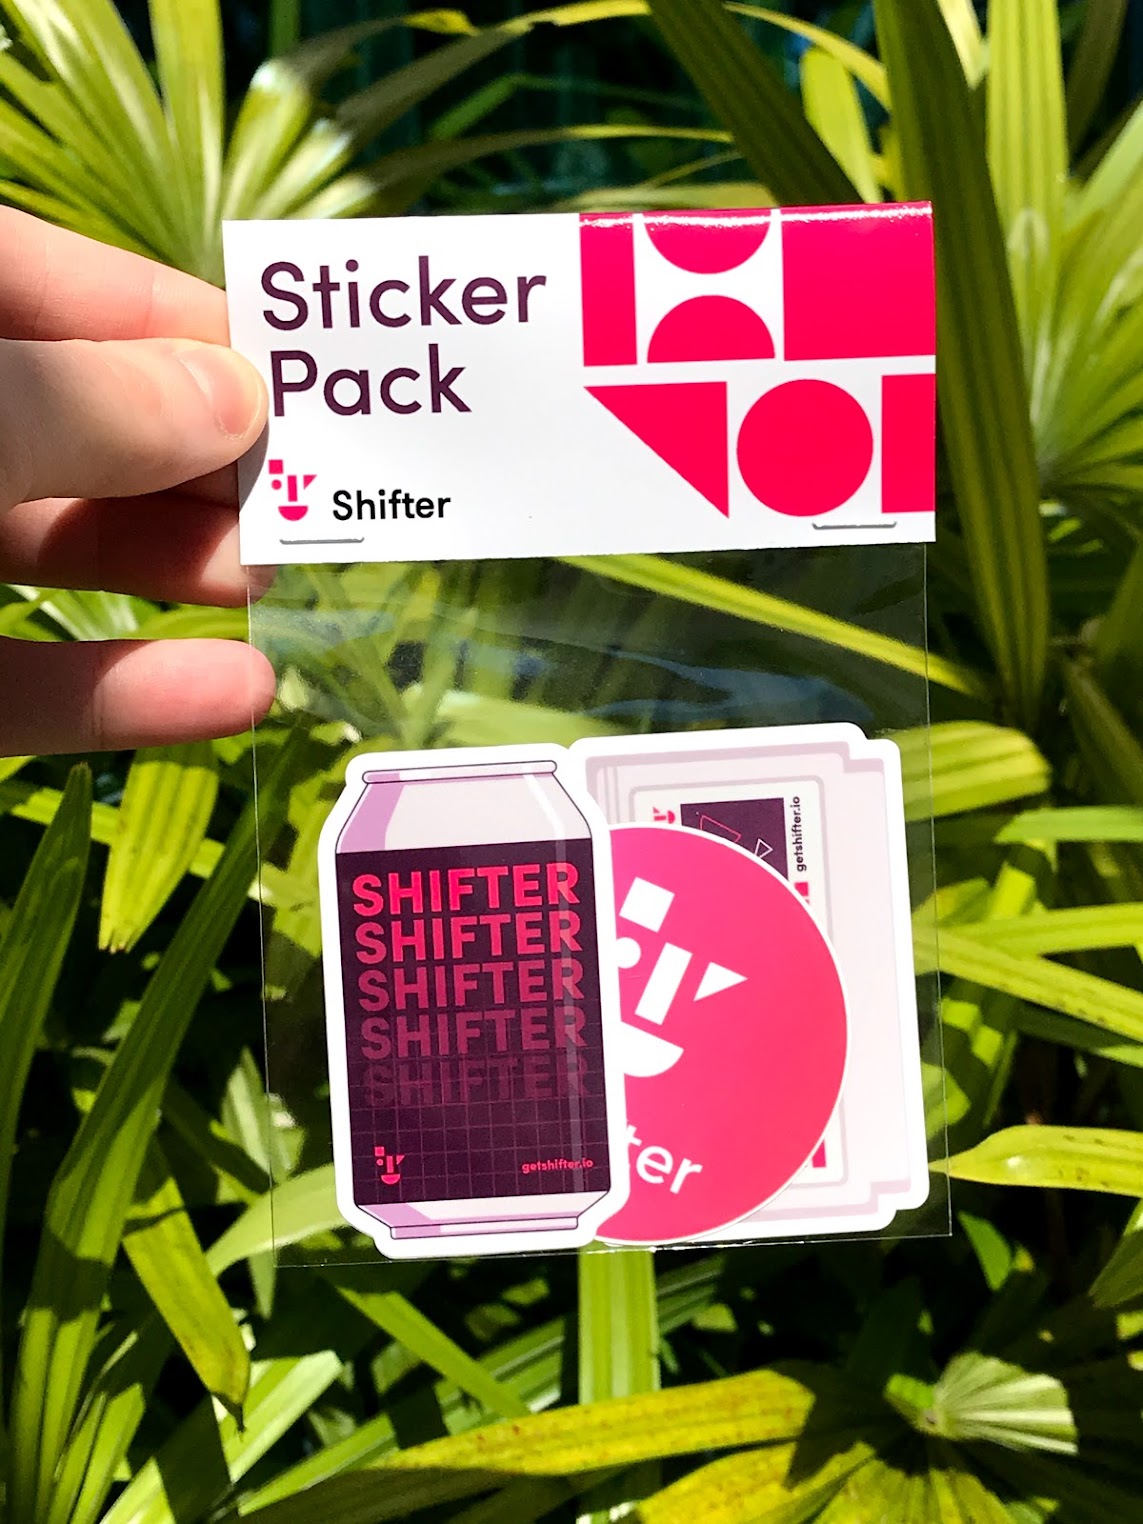 StickerPack